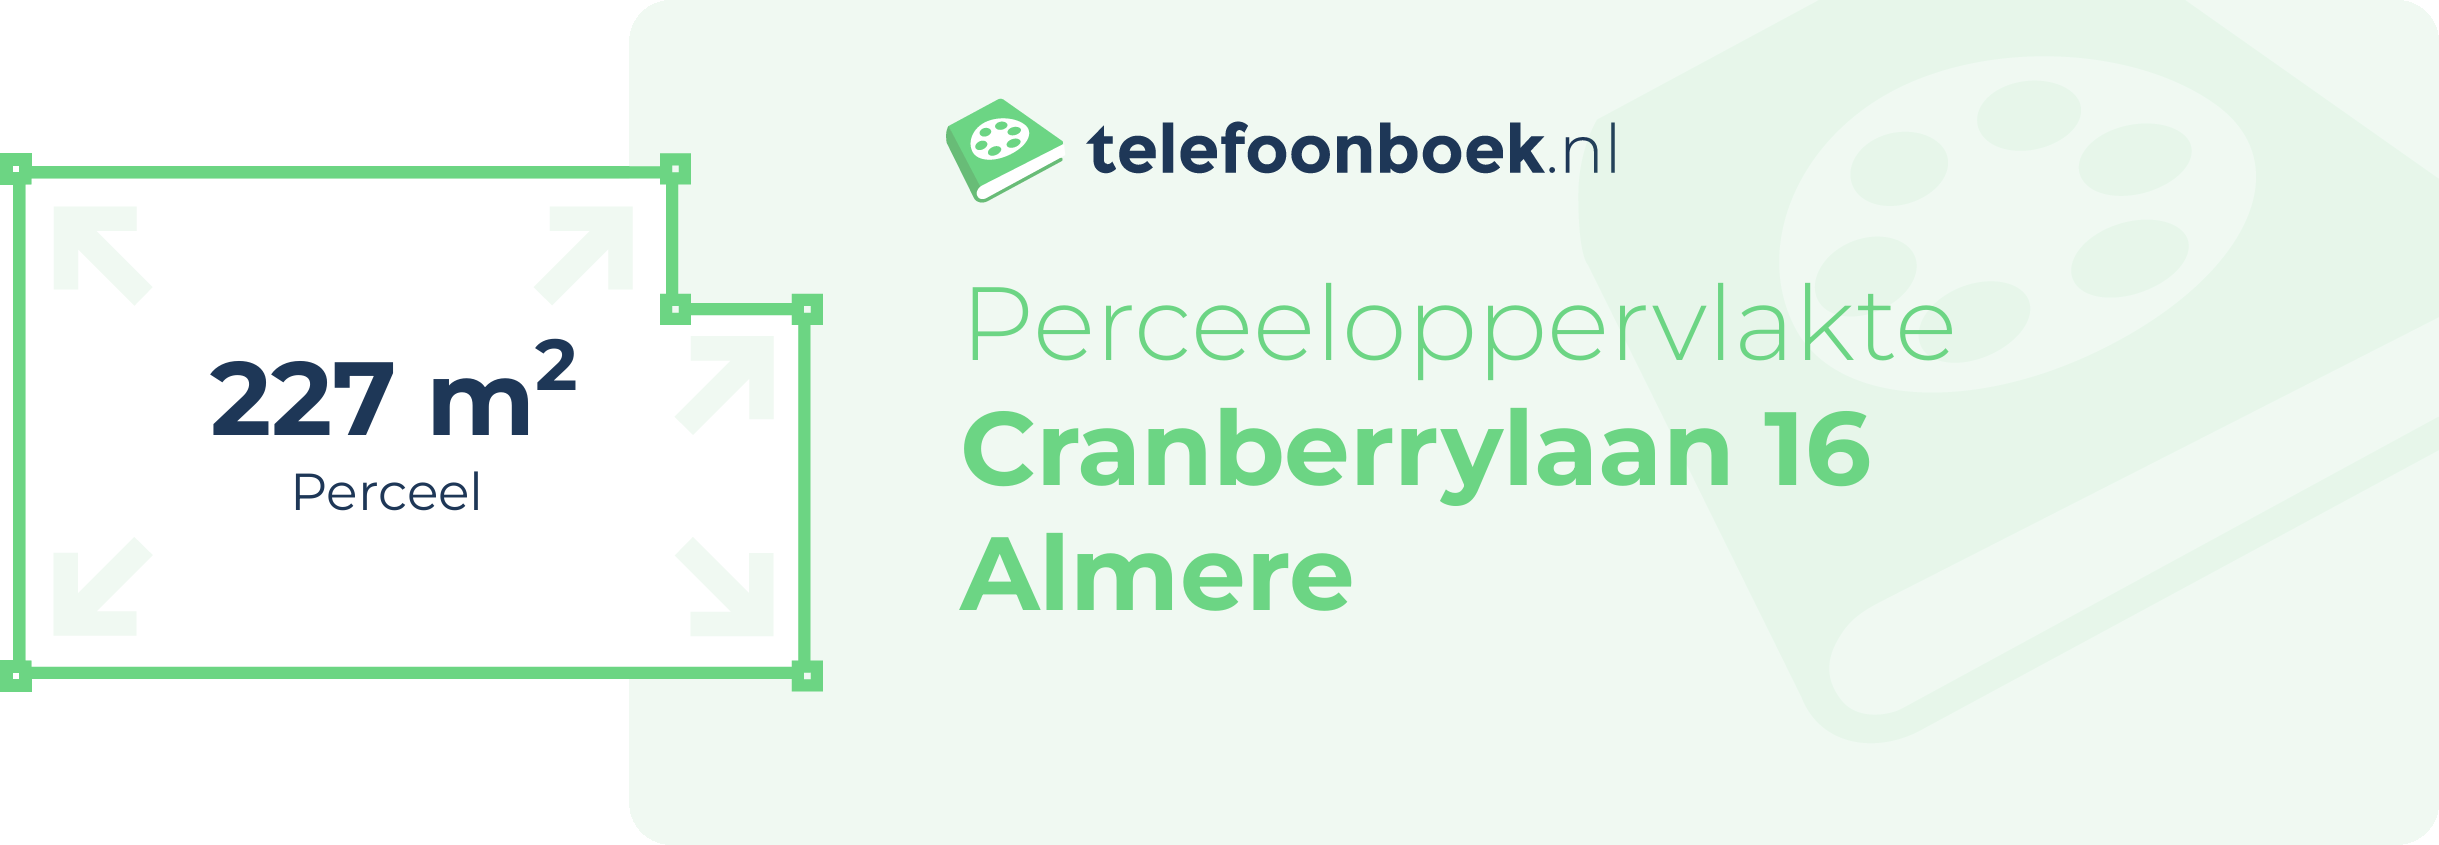 Perceeloppervlakte Cranberrylaan 16 Almere